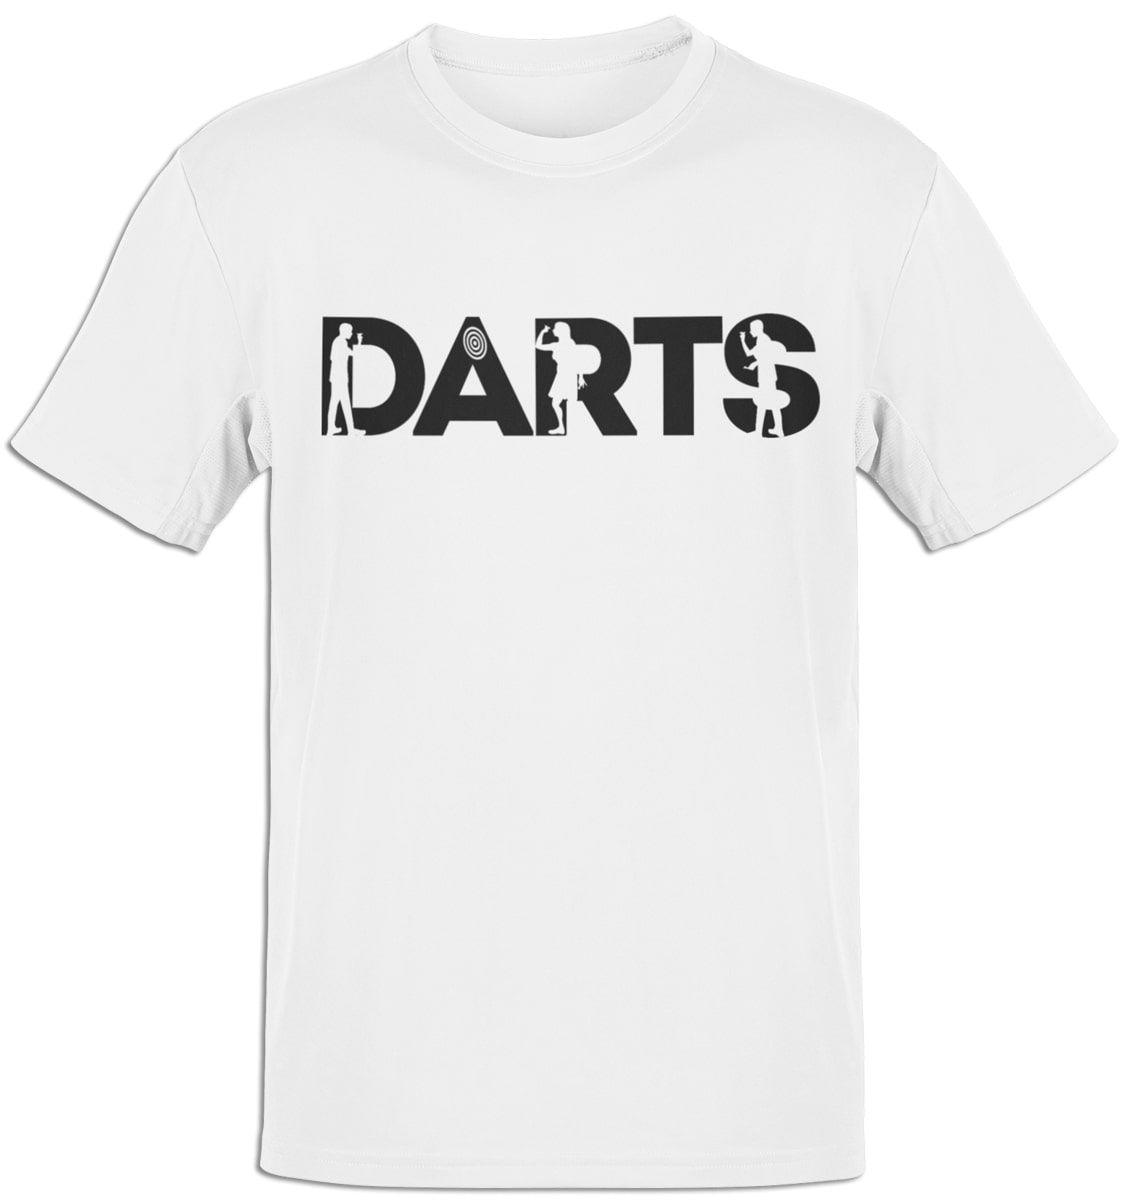 darts t shirt shop